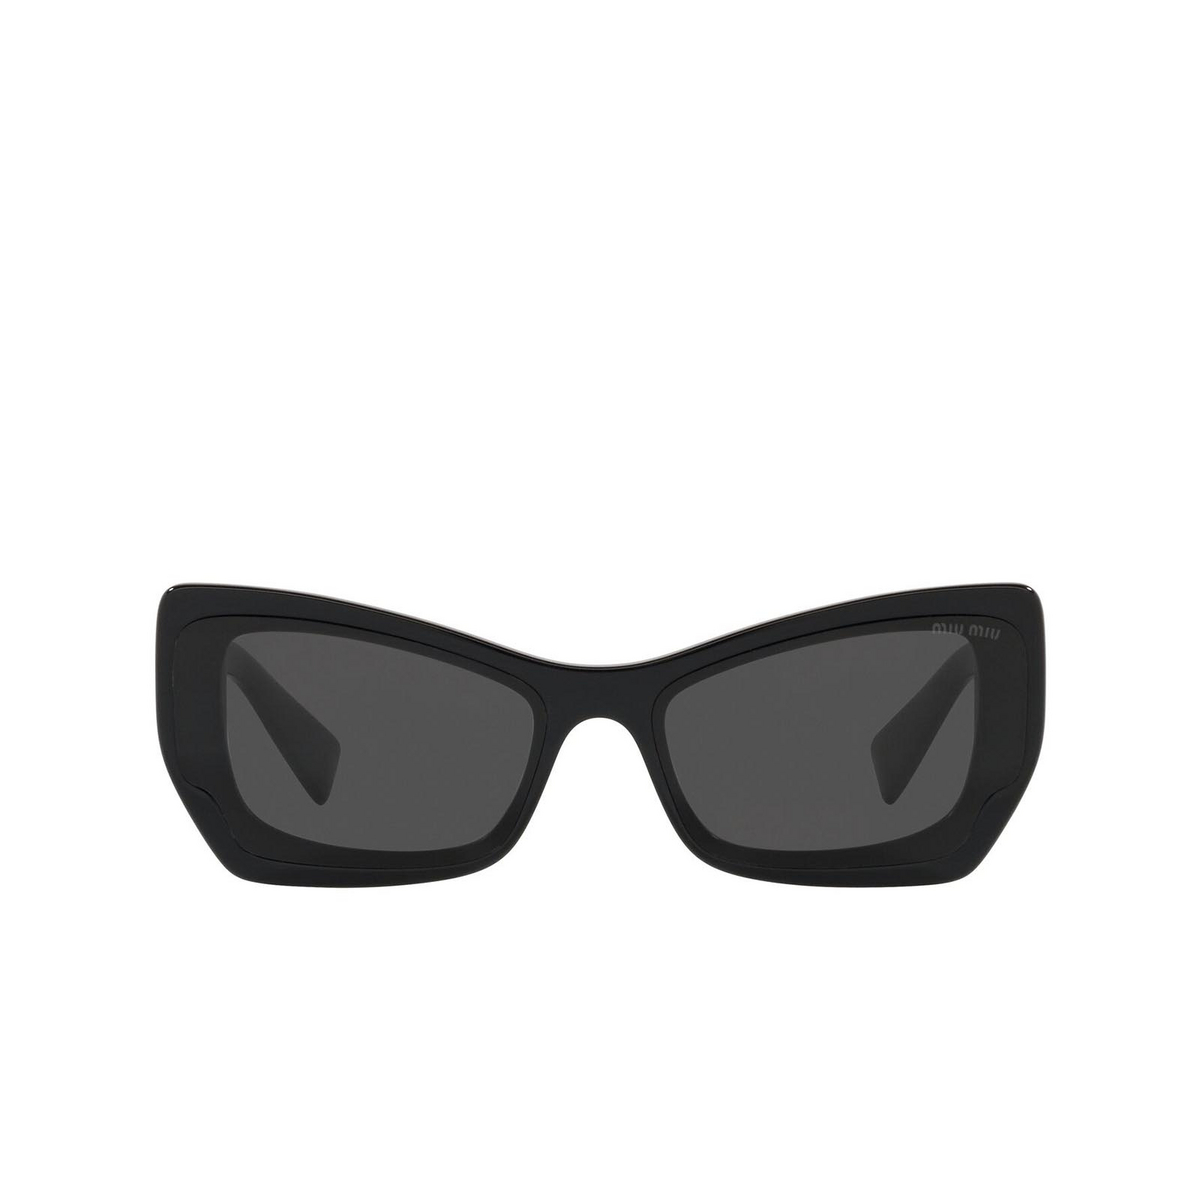 Miu Miu® Irregular Sunglasses: MU 07XS color Crystal Black 03I5S0 - front view.